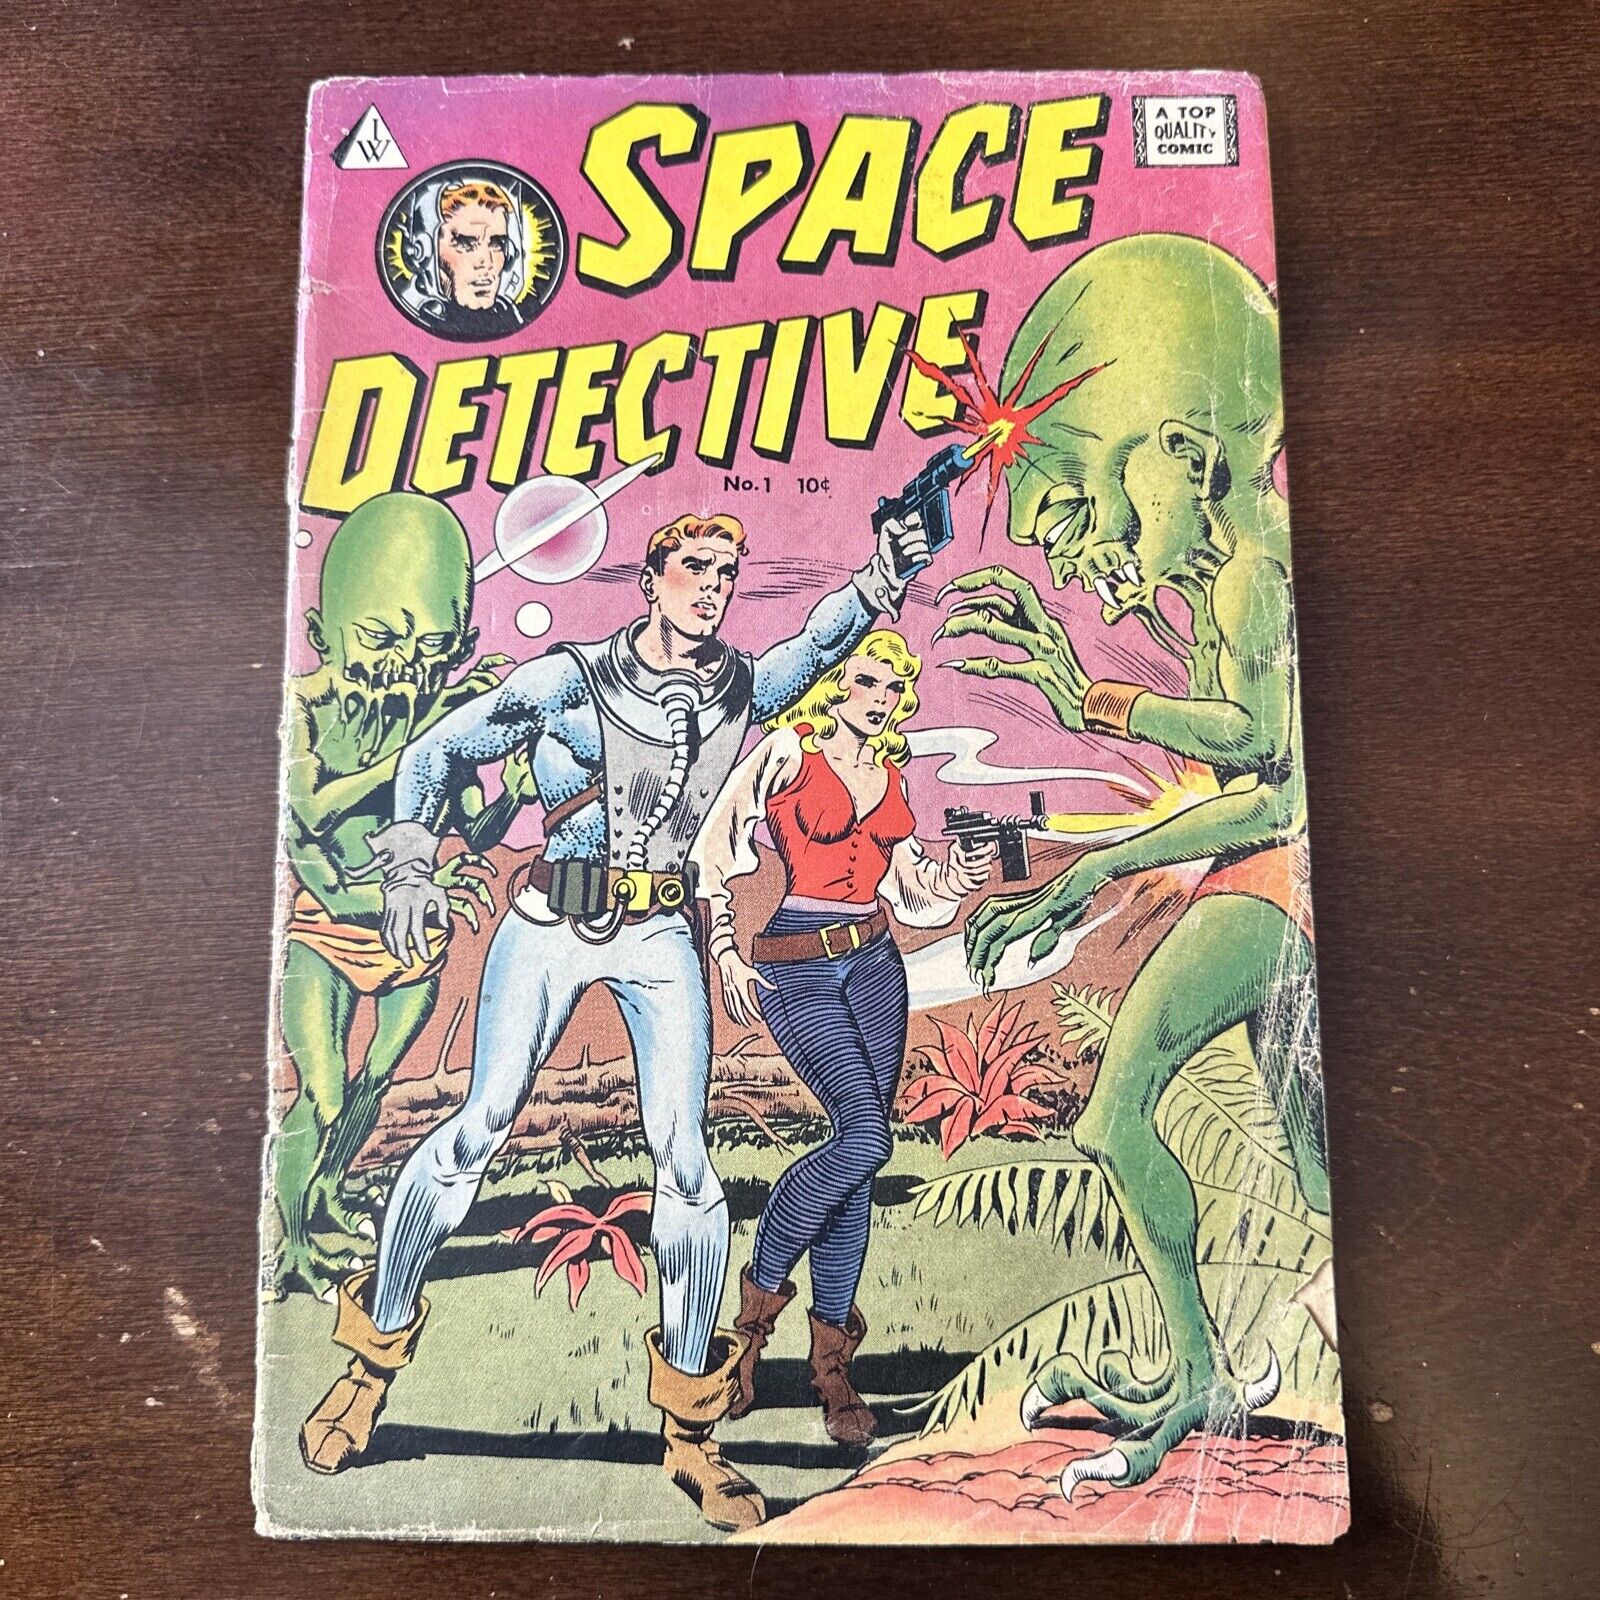 Space Detective #1 (1958) - Sci-Fi Good Girl Art